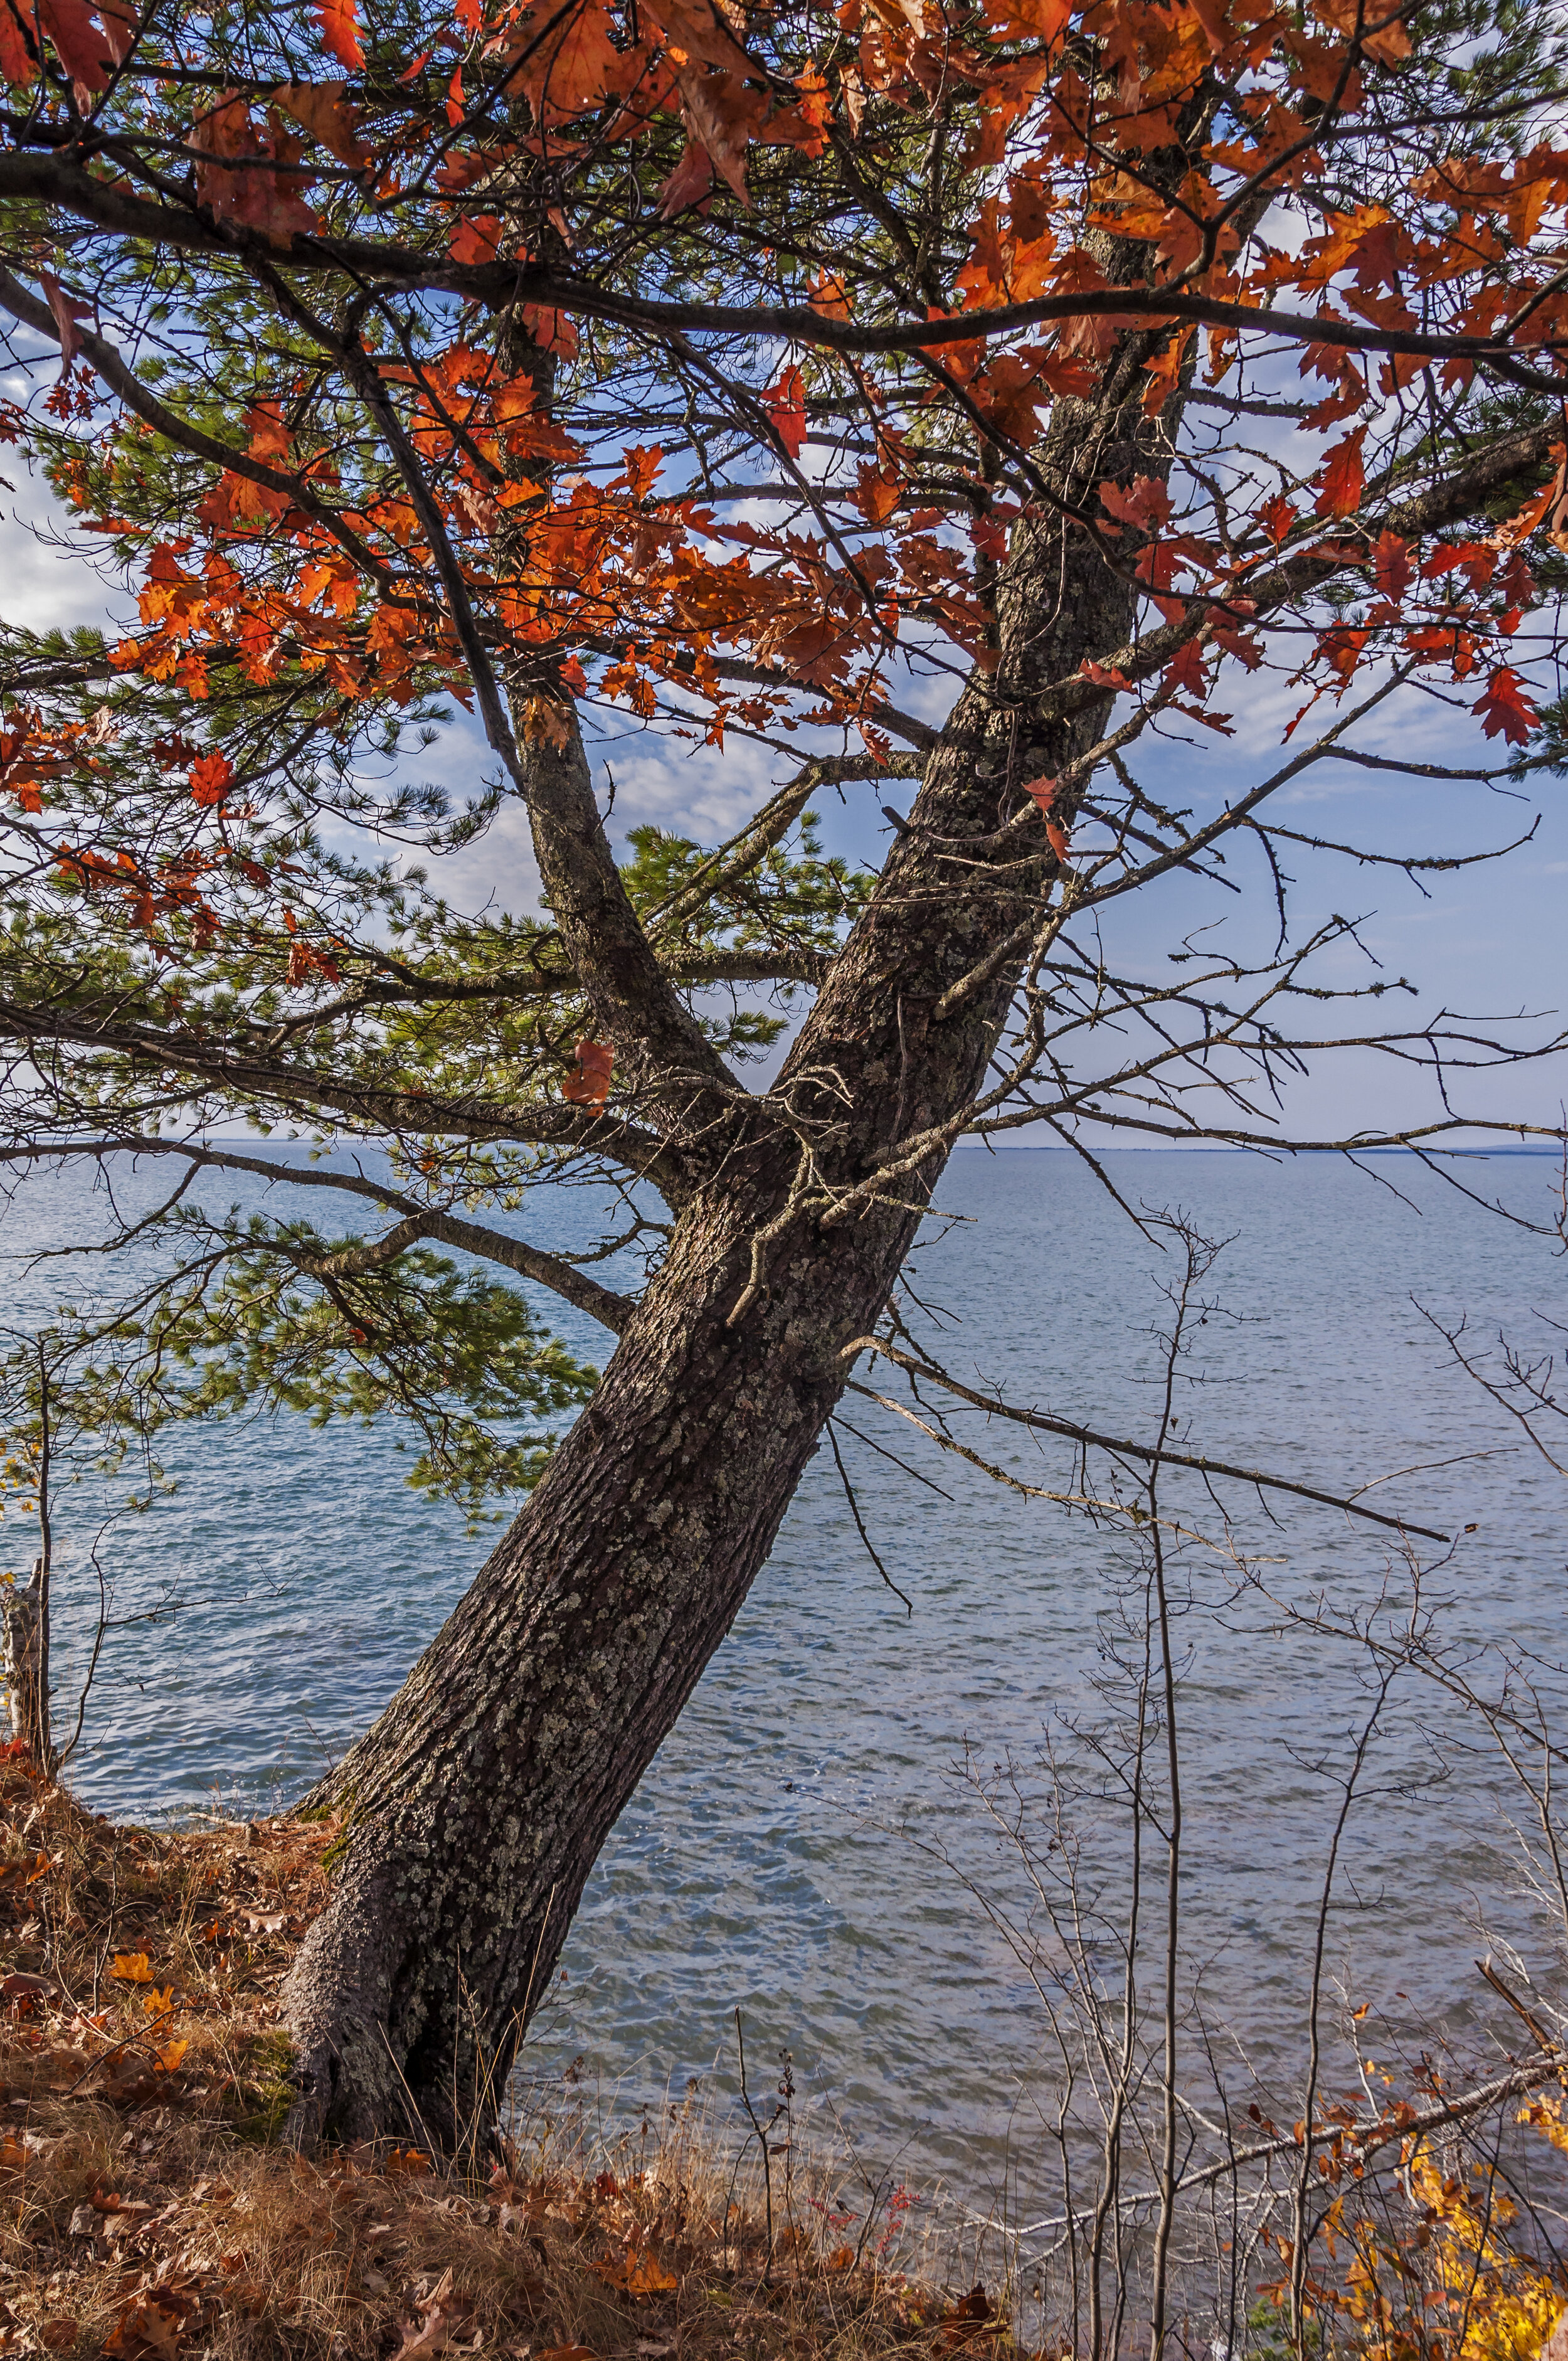  Madeline Island, Wisconsin: Autumn Colors along Lake Superior 